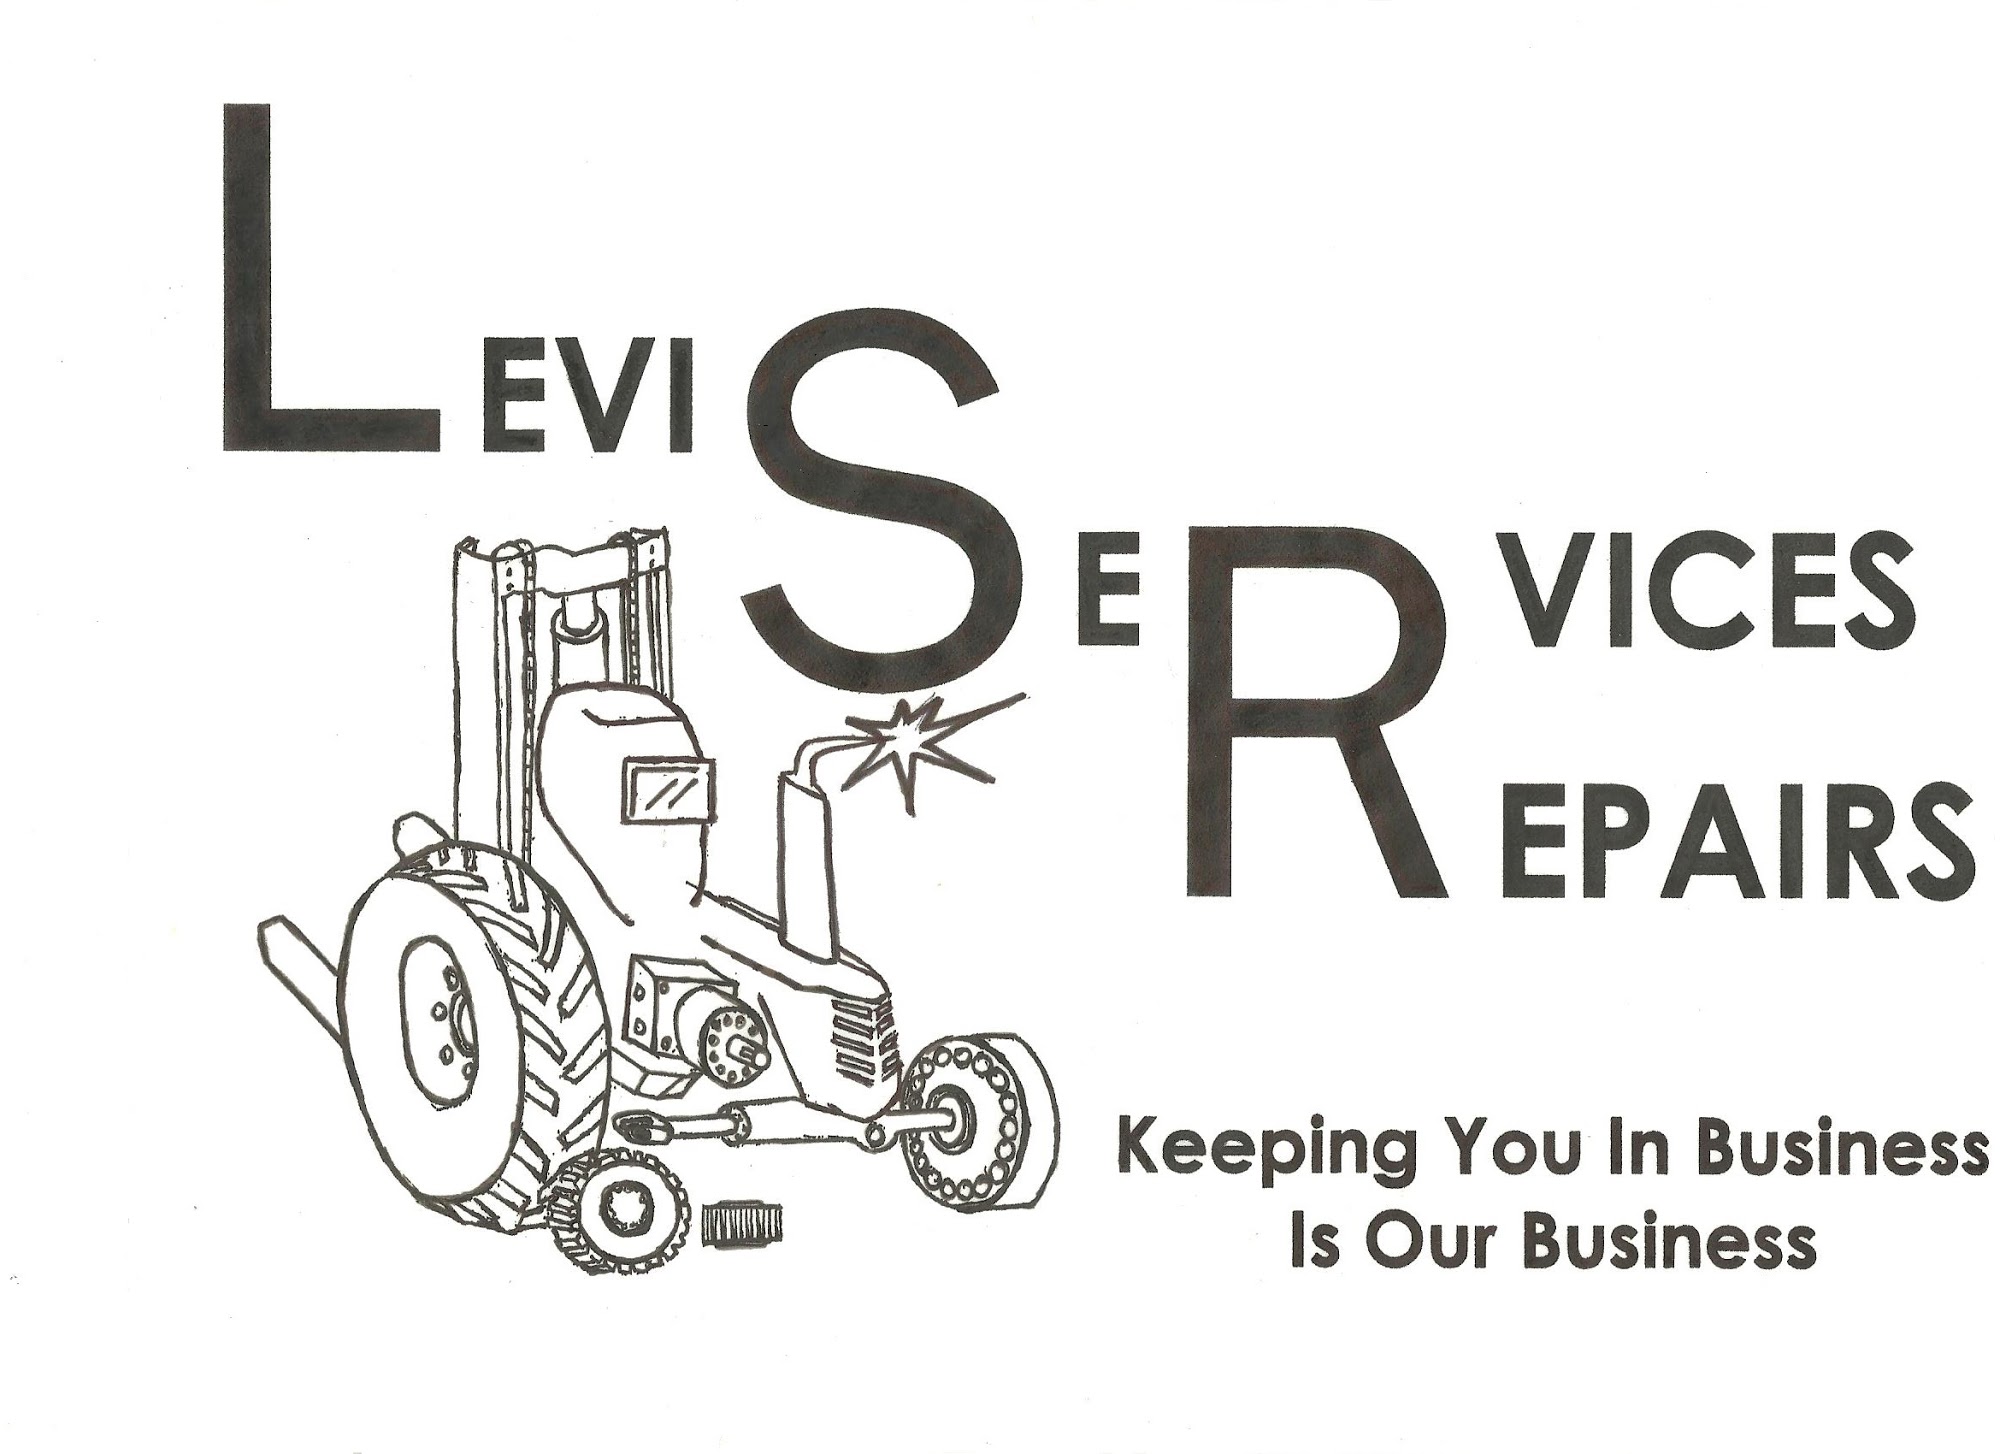 Levis Services Repairs